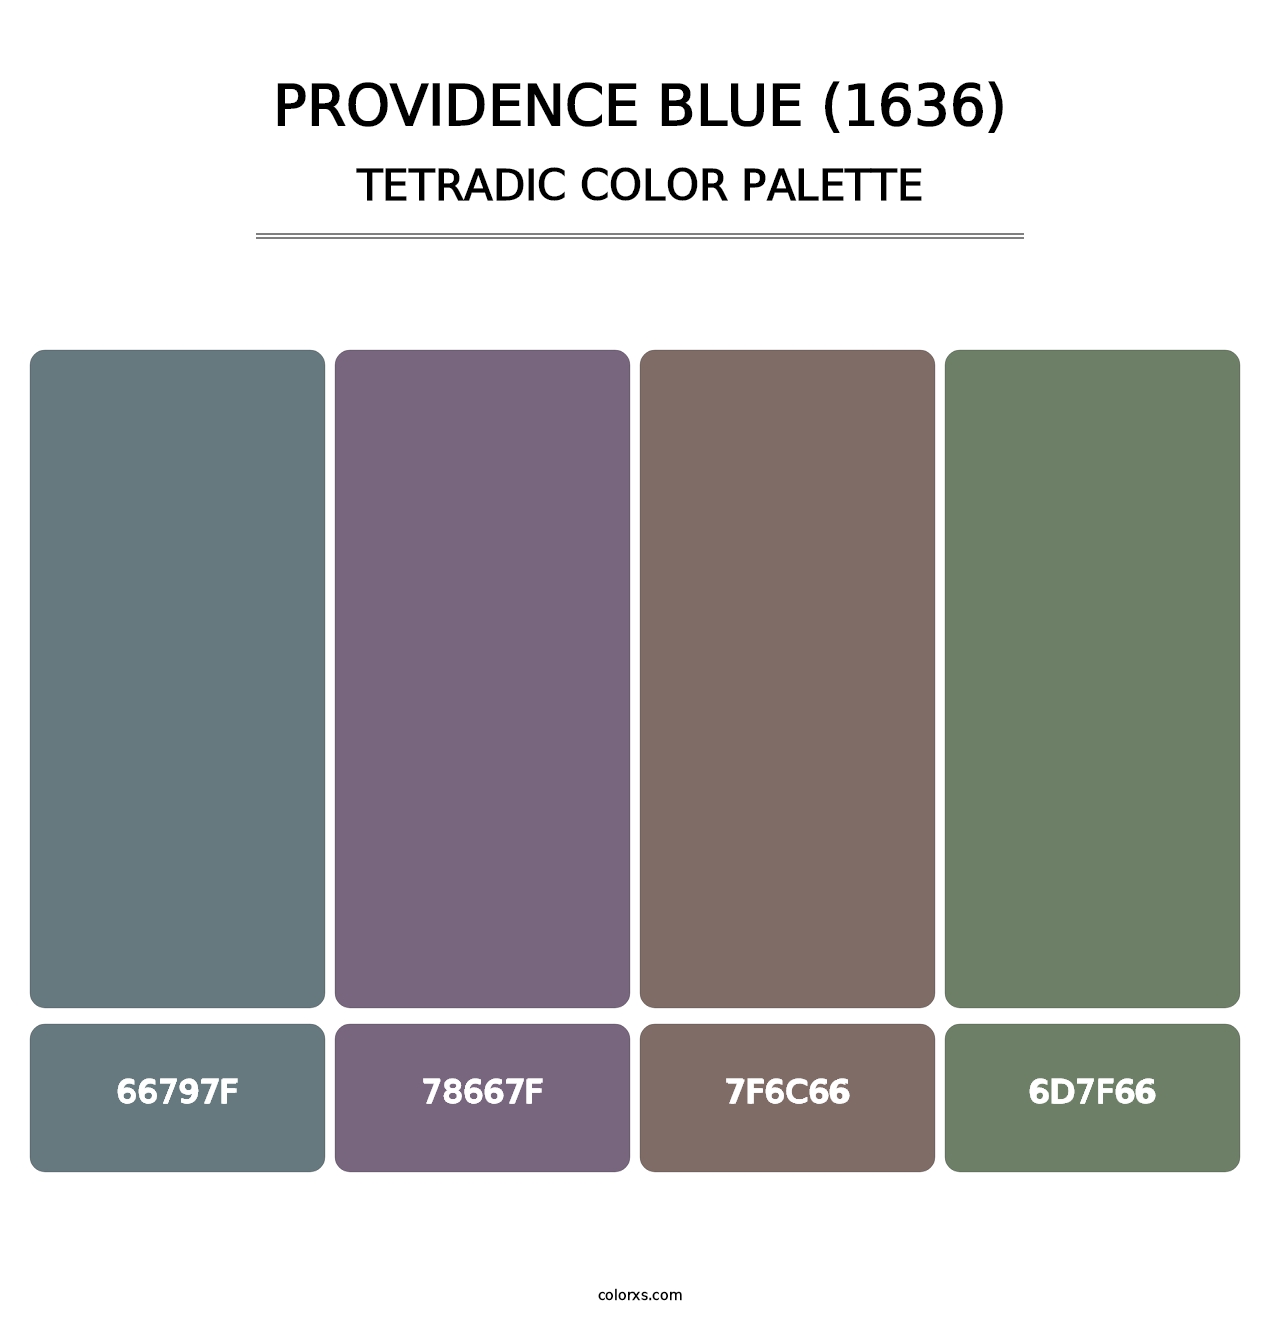 Providence Blue (1636) - Tetradic Color Palette